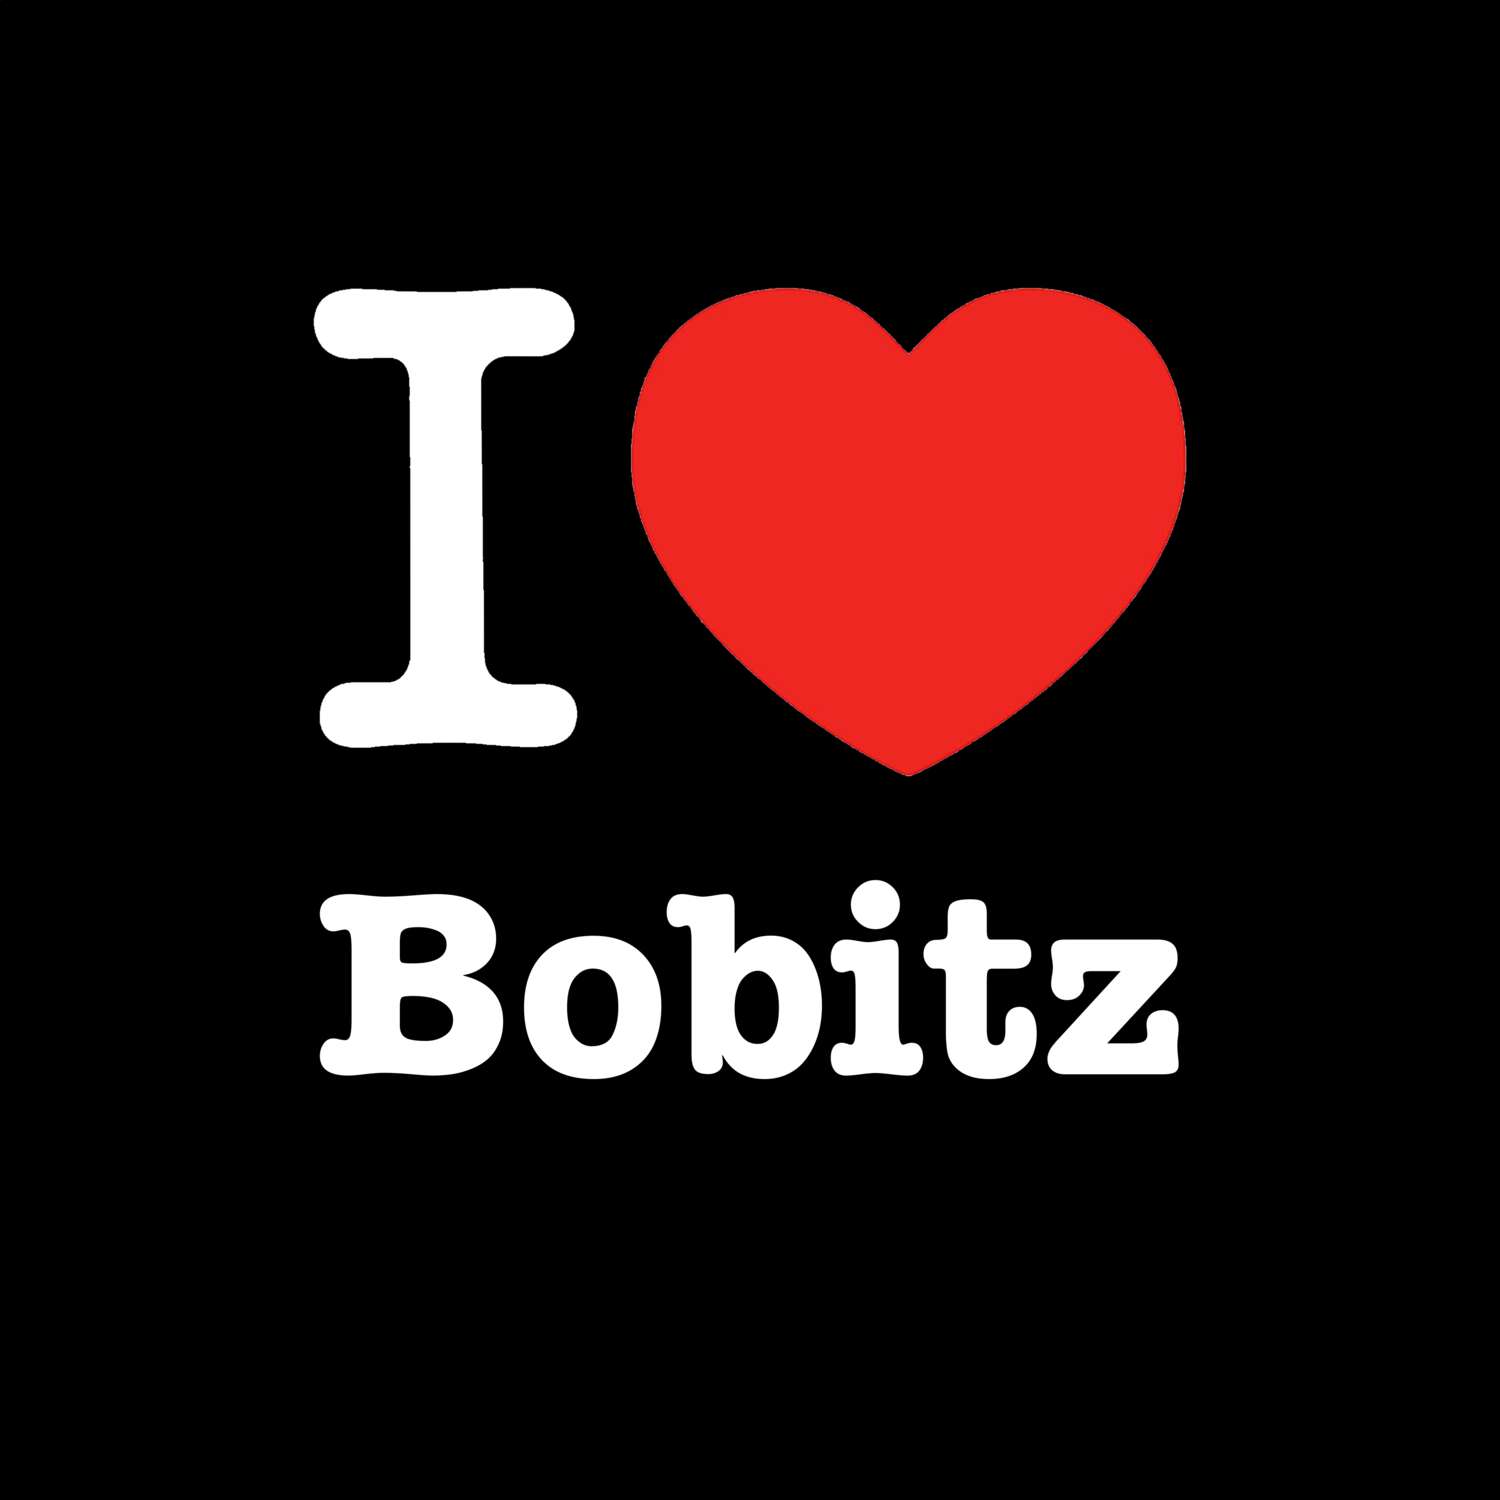 Bobitz T-Shirt »I love«